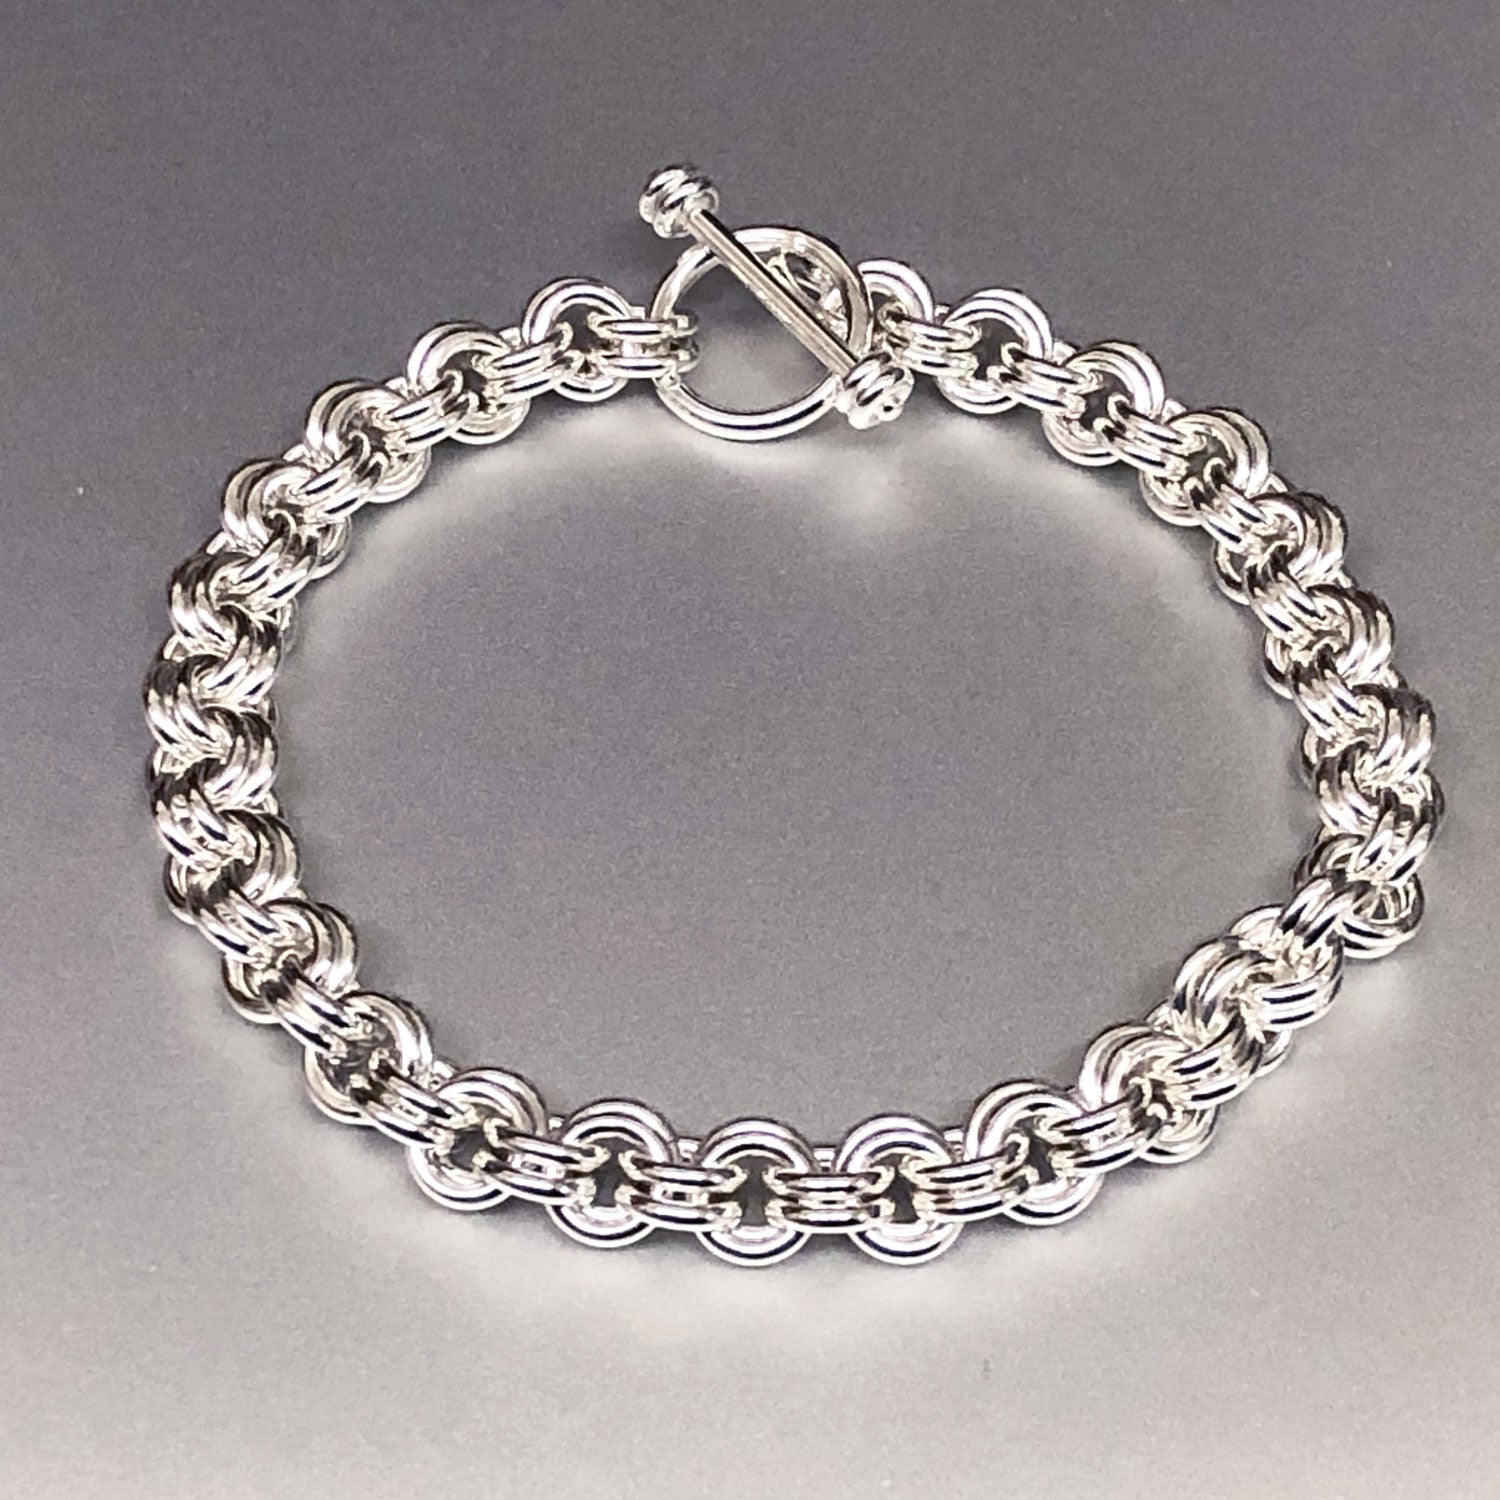 Special Design Silver Chain Bracelet For Men No:2